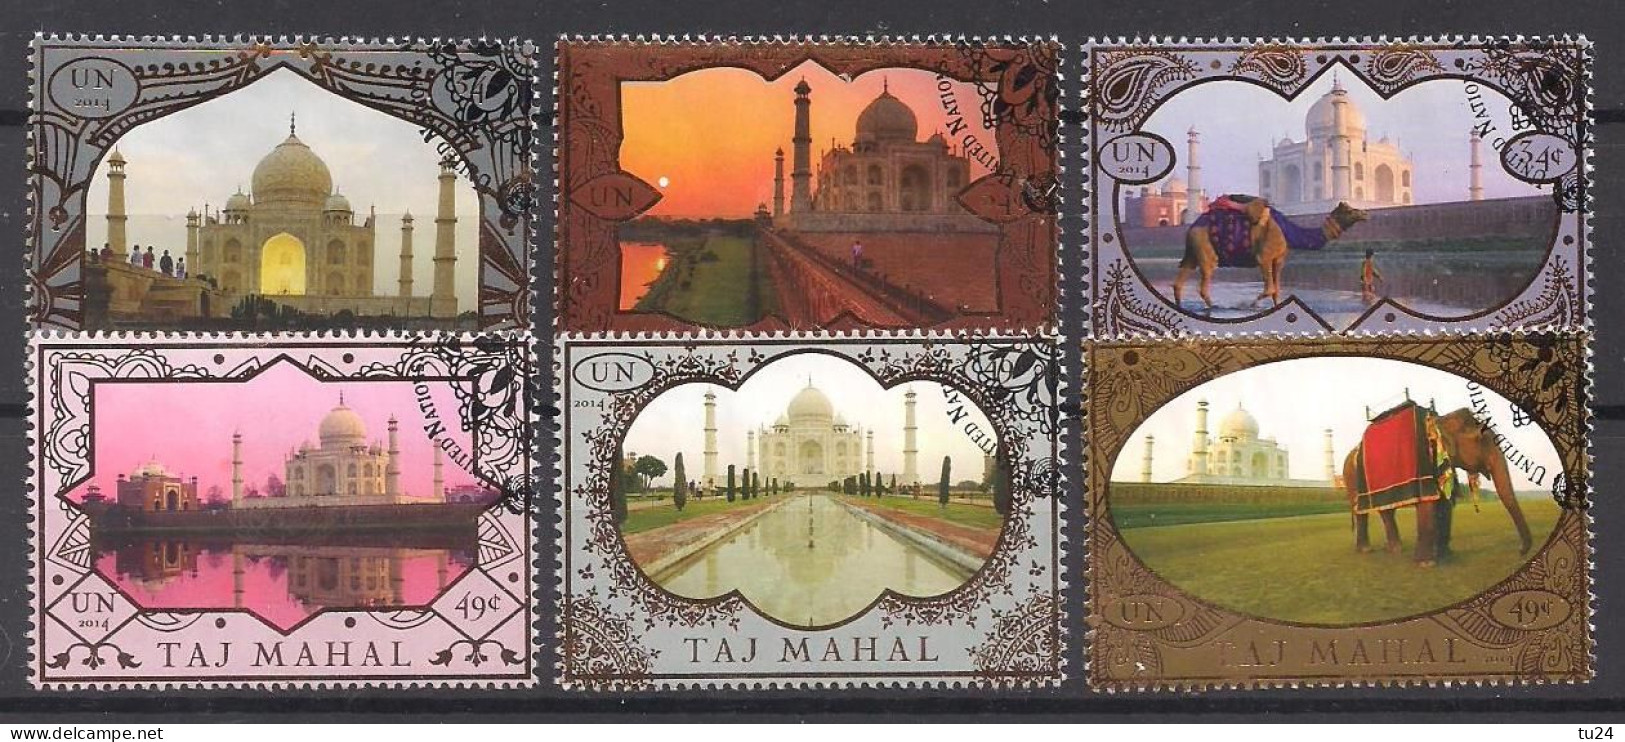 UNO  New York  (2014)  Mi.Nr.  1420 - 1425  Gest. / Used  (9hf06) Taj Mahal - Oblitérés